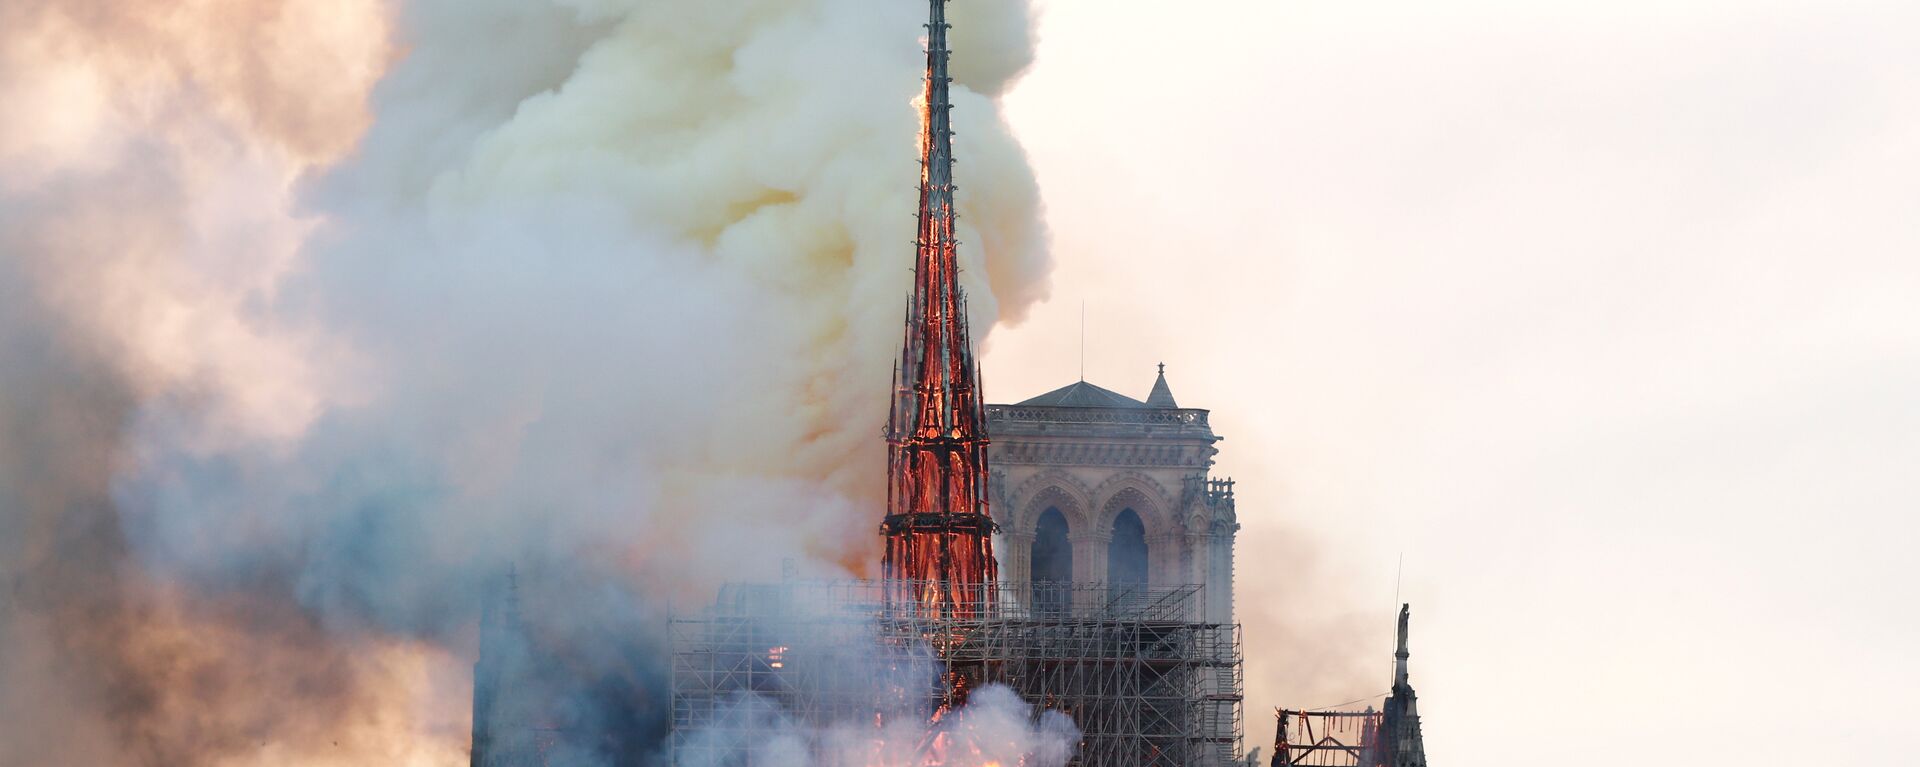 Incendio en la catedral parisina de Notre Dame - Sputnik Mundo, 1920, 29.04.2019